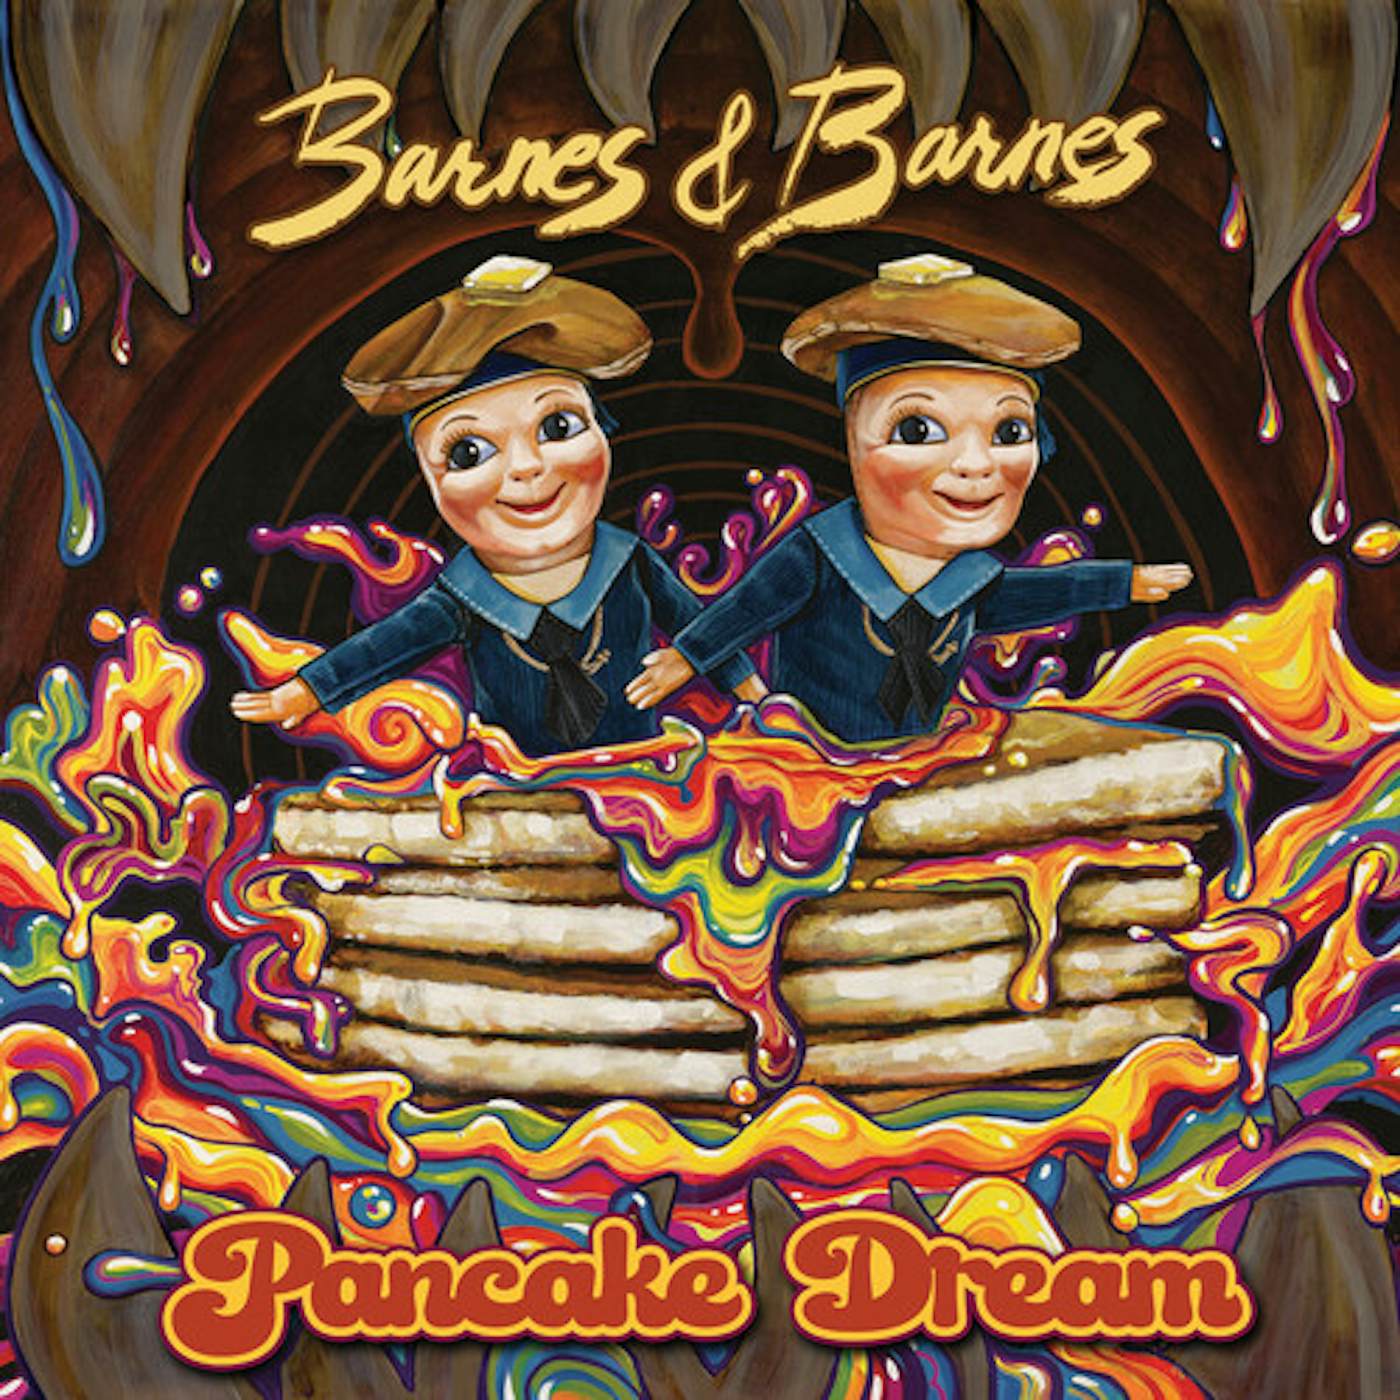 Barnes & Barnes Pancake Dream Vinyl Record